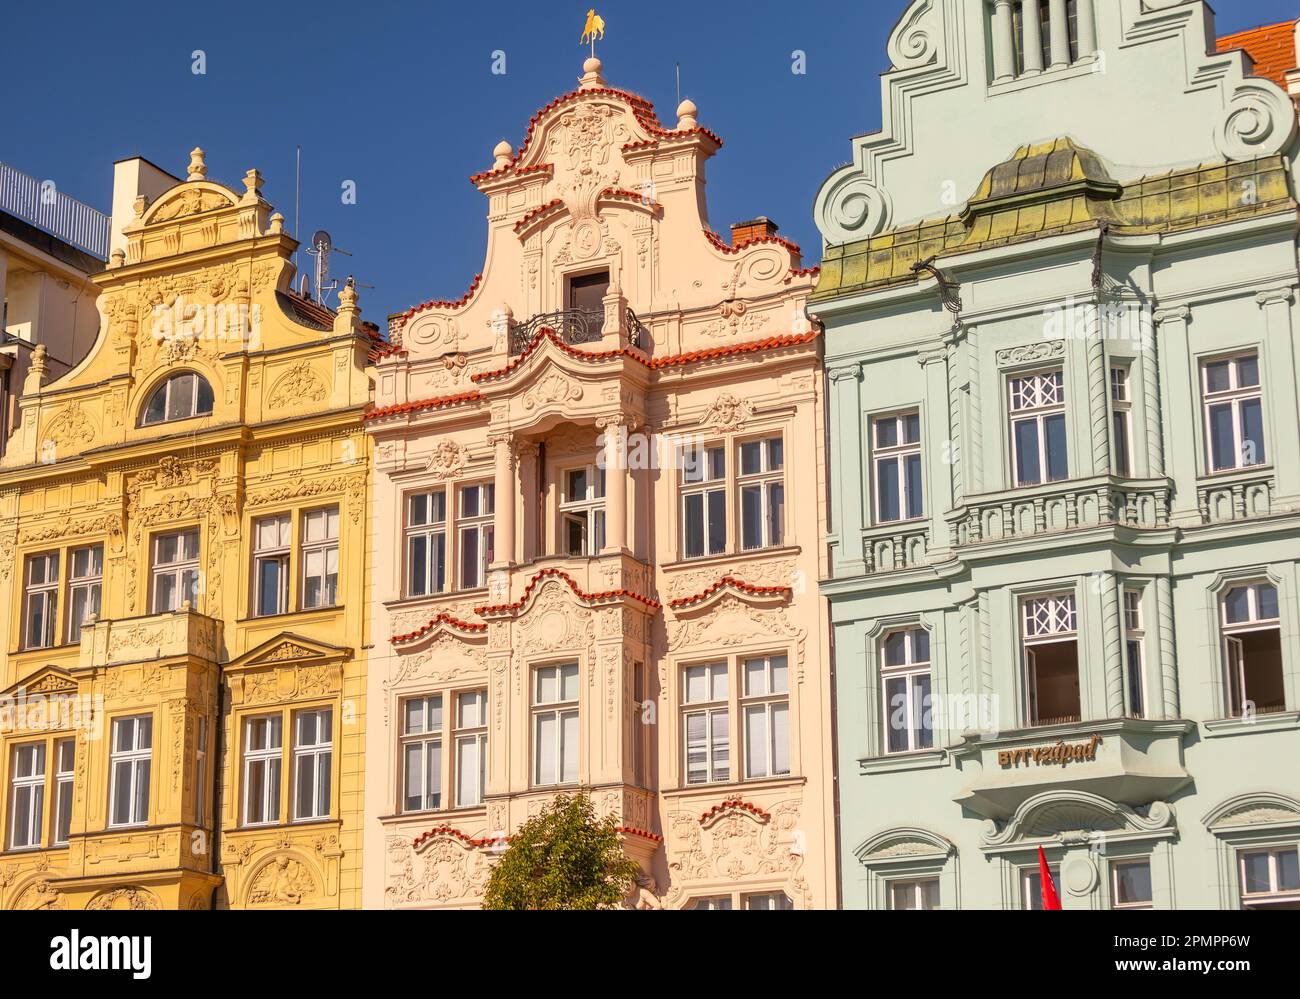 PILSEN, CZECH REPUBLIC, EUROPE - Colorful building facades in the Main Square of Pilsen. Stock Photo